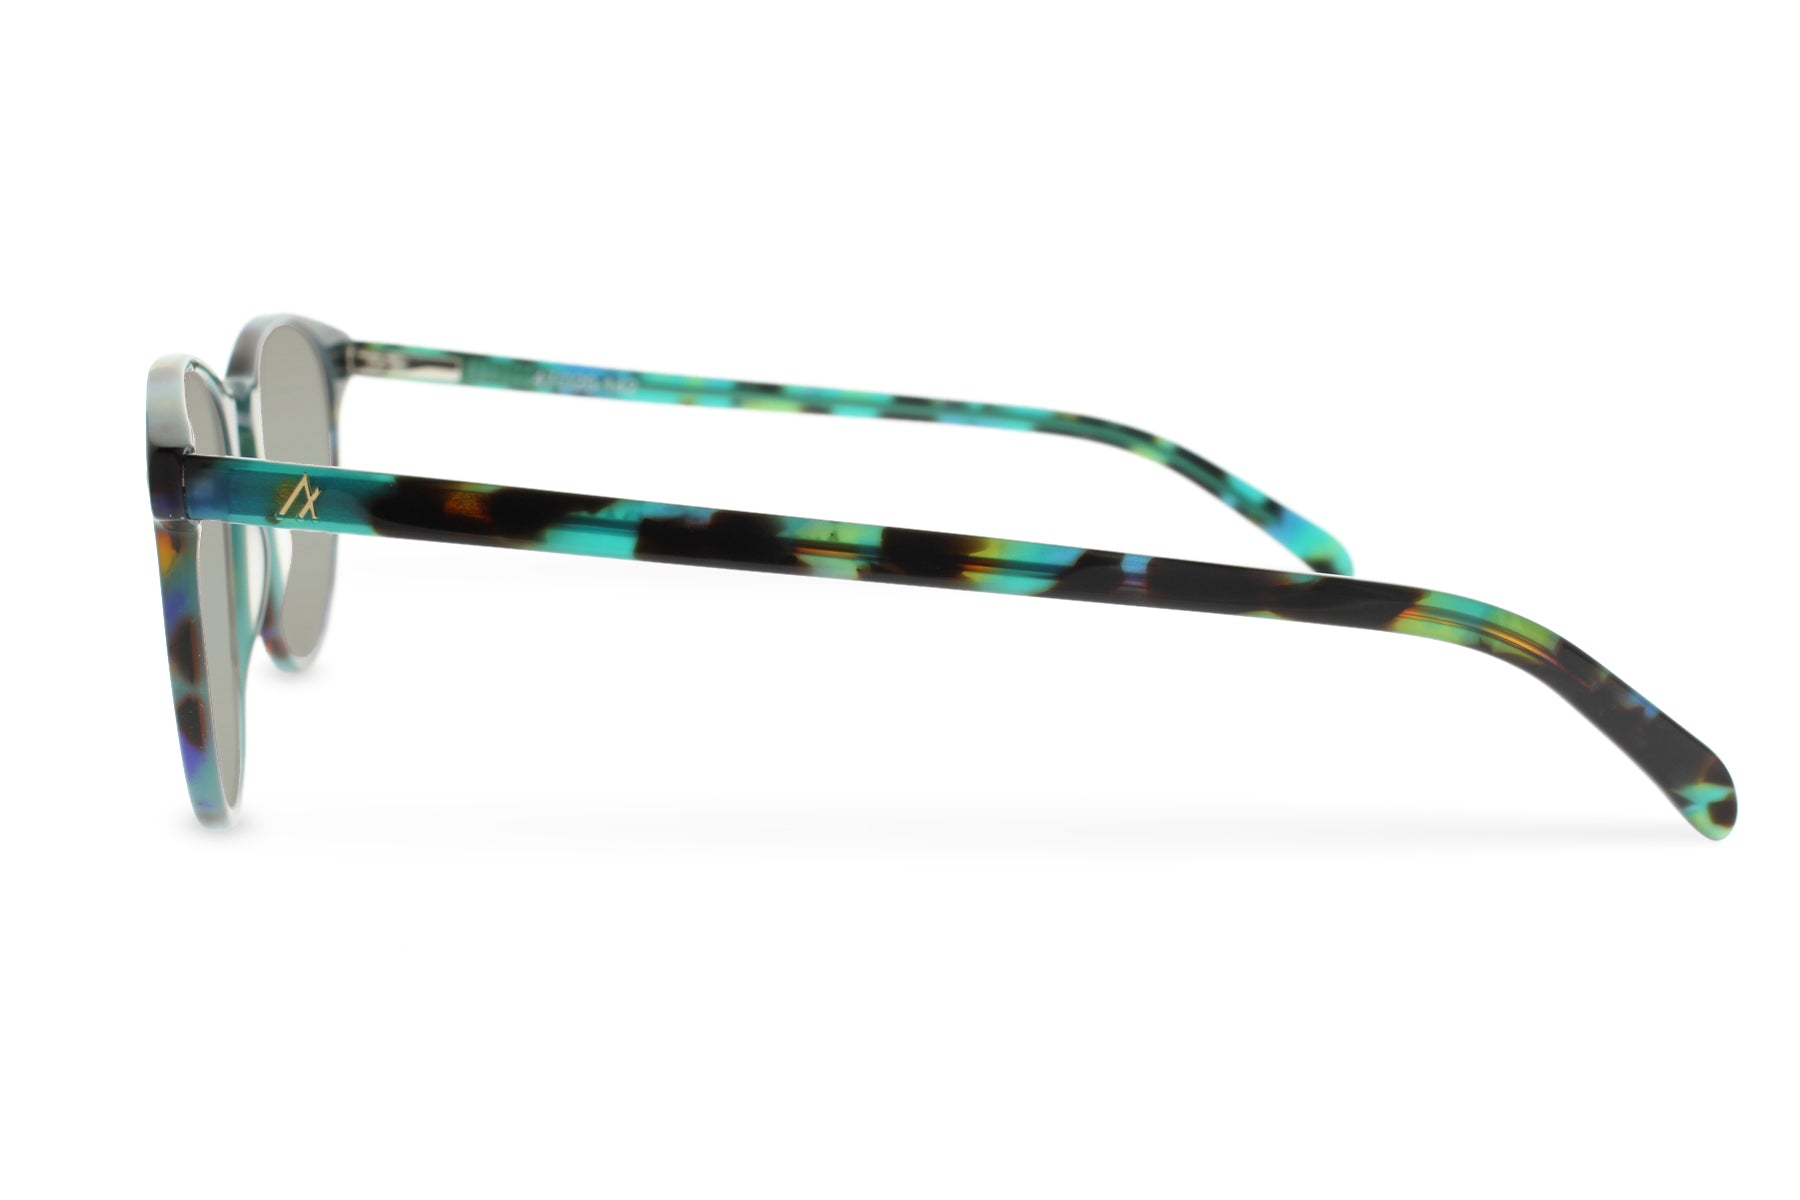 Pantos Migraine and Light Sensitivity Glasses by Axon Optics